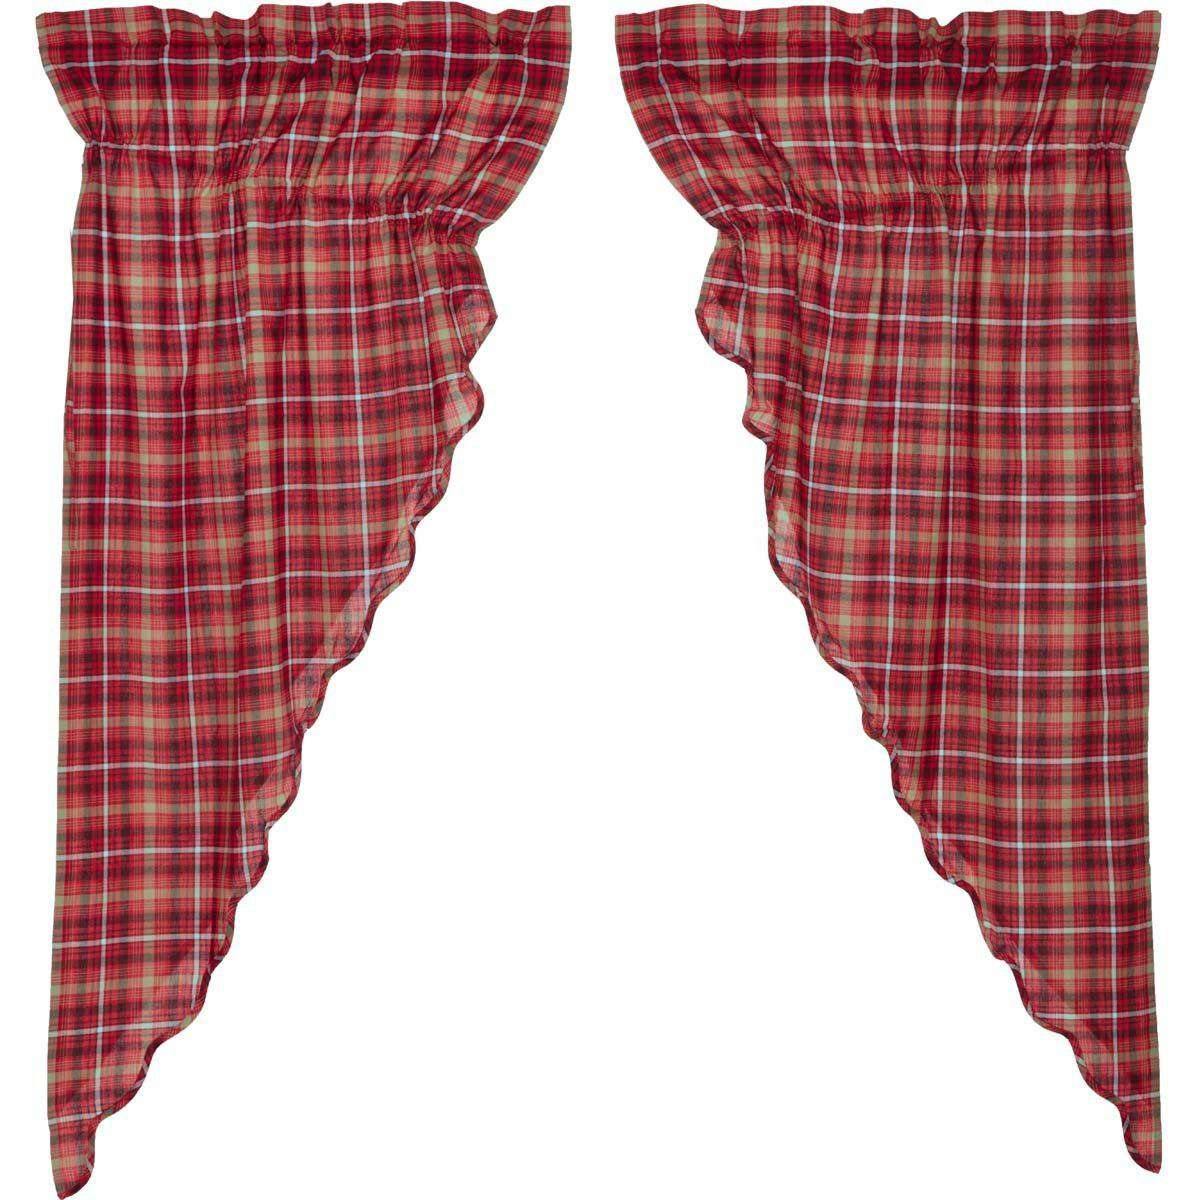 Braxton Scalloped Prairie Short Panel Curtain Set of 2 63x36x18 VHC Brands online